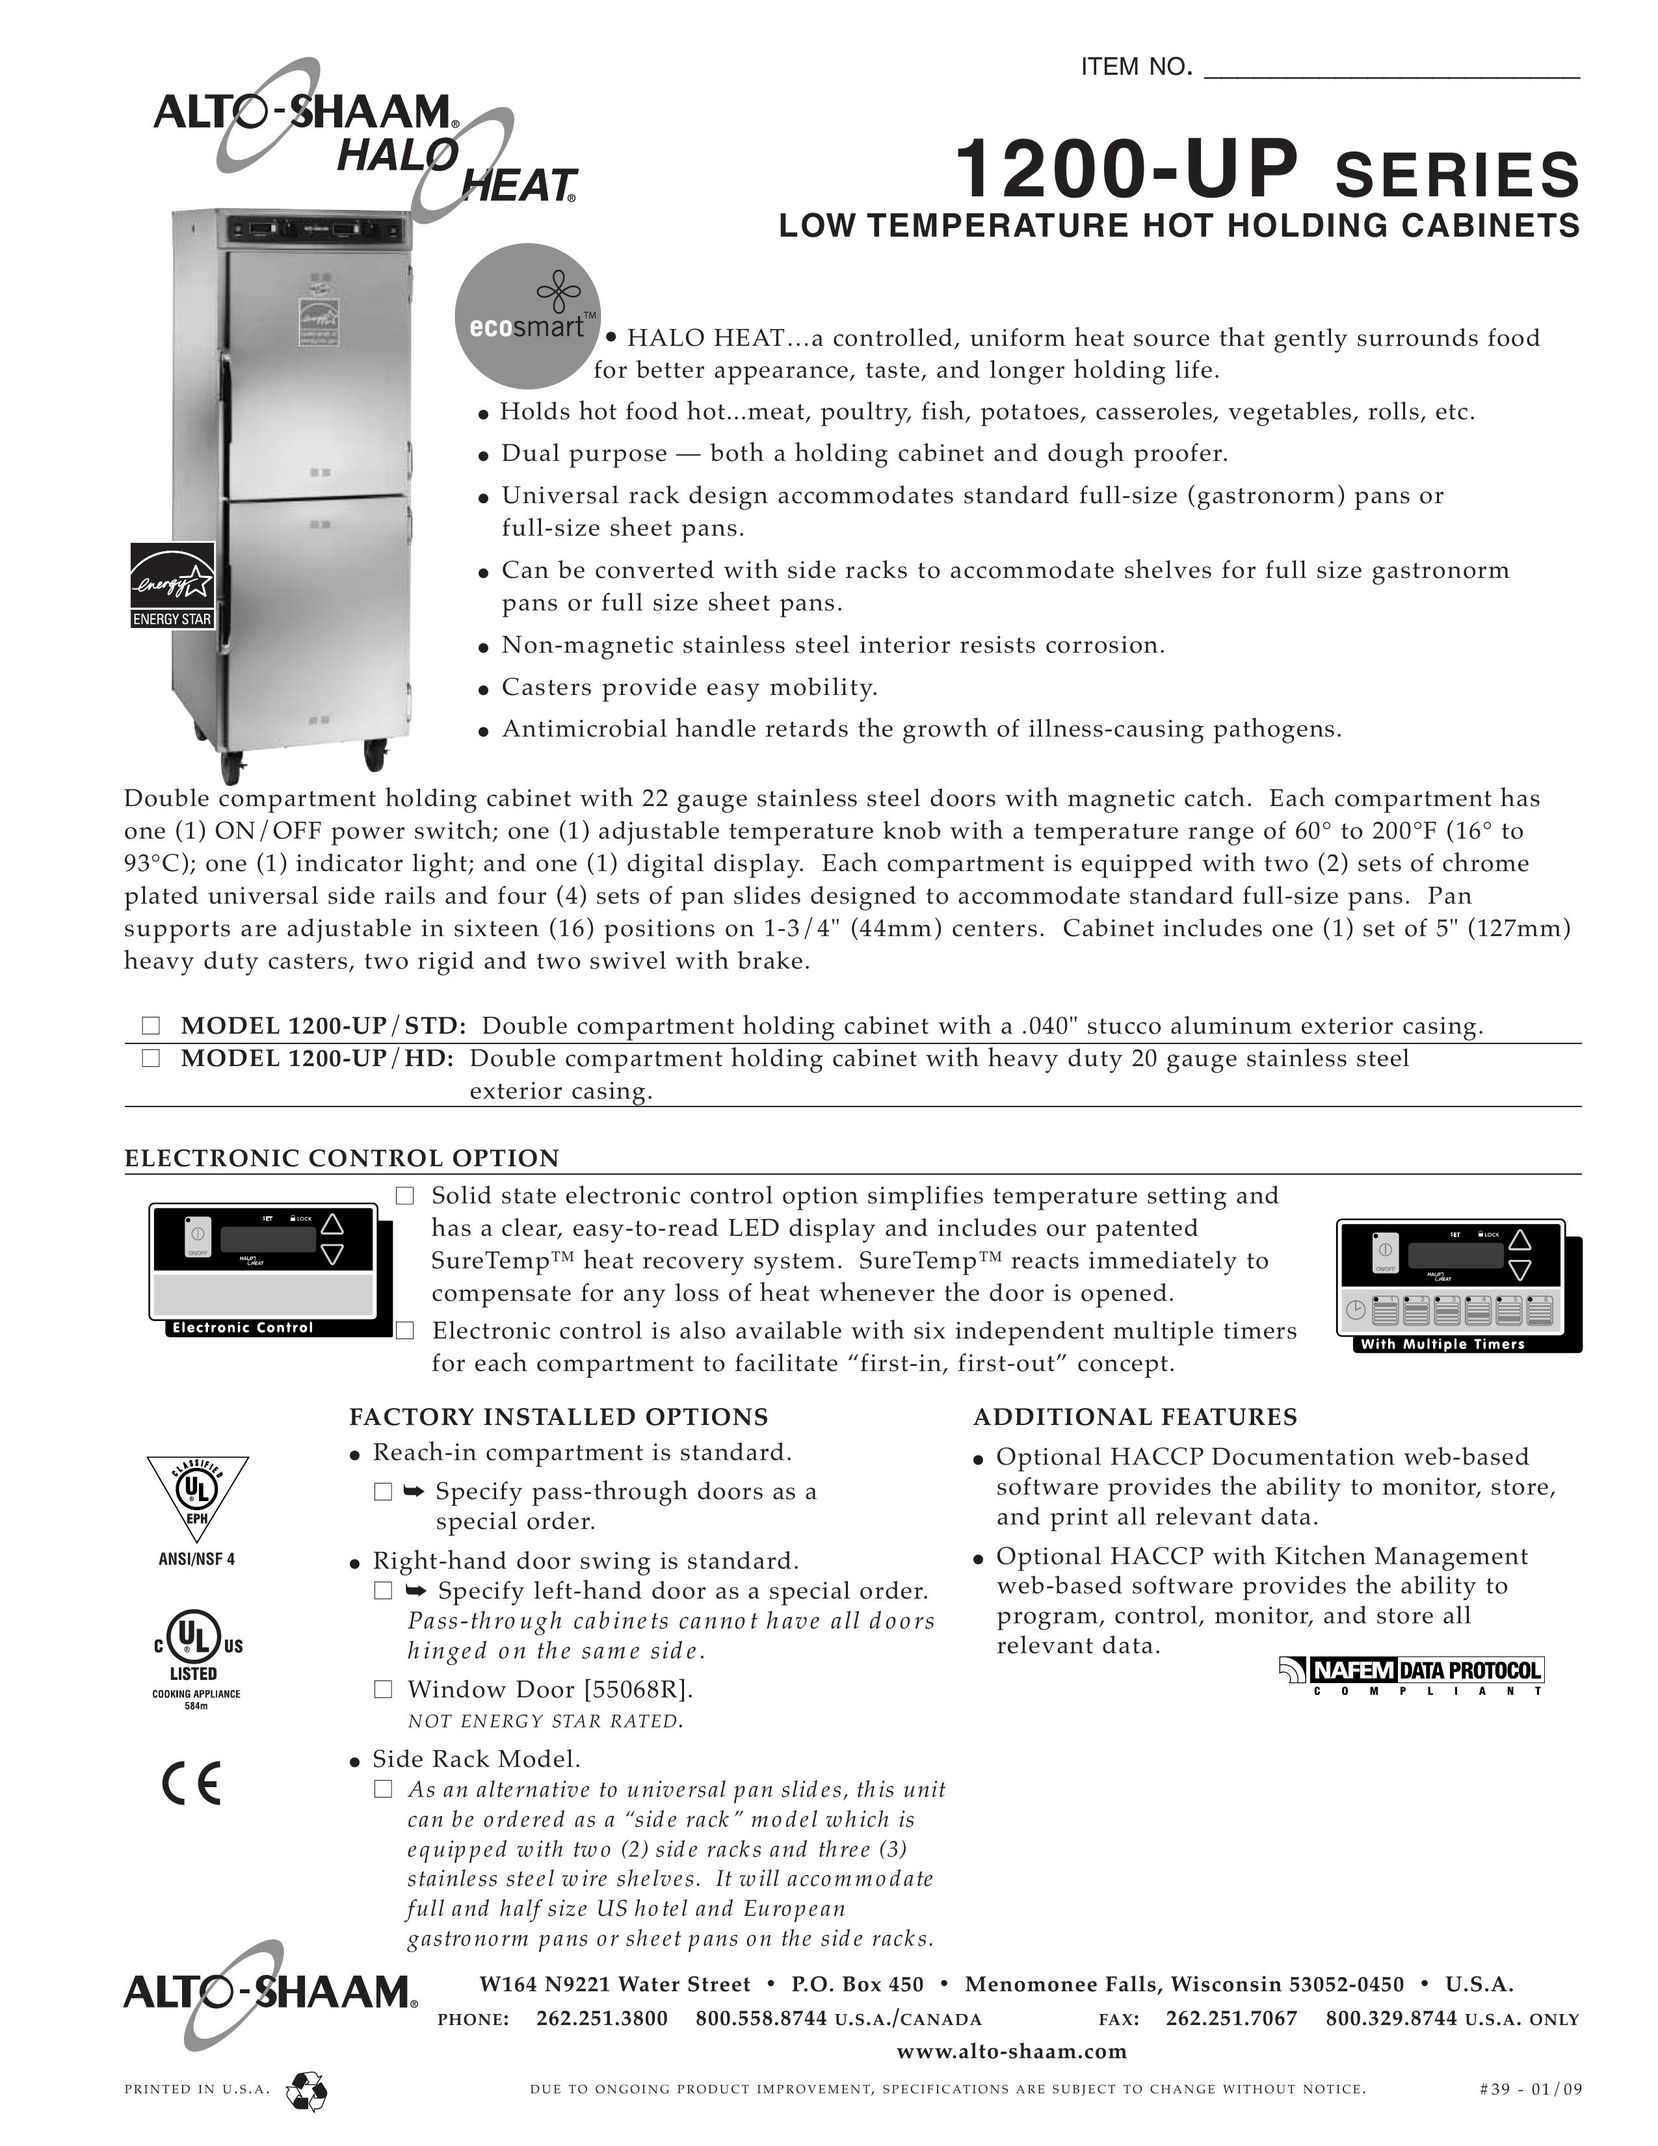 Alto-Shaam 1200-UP Series Kitchen Entertainment Center User Manual